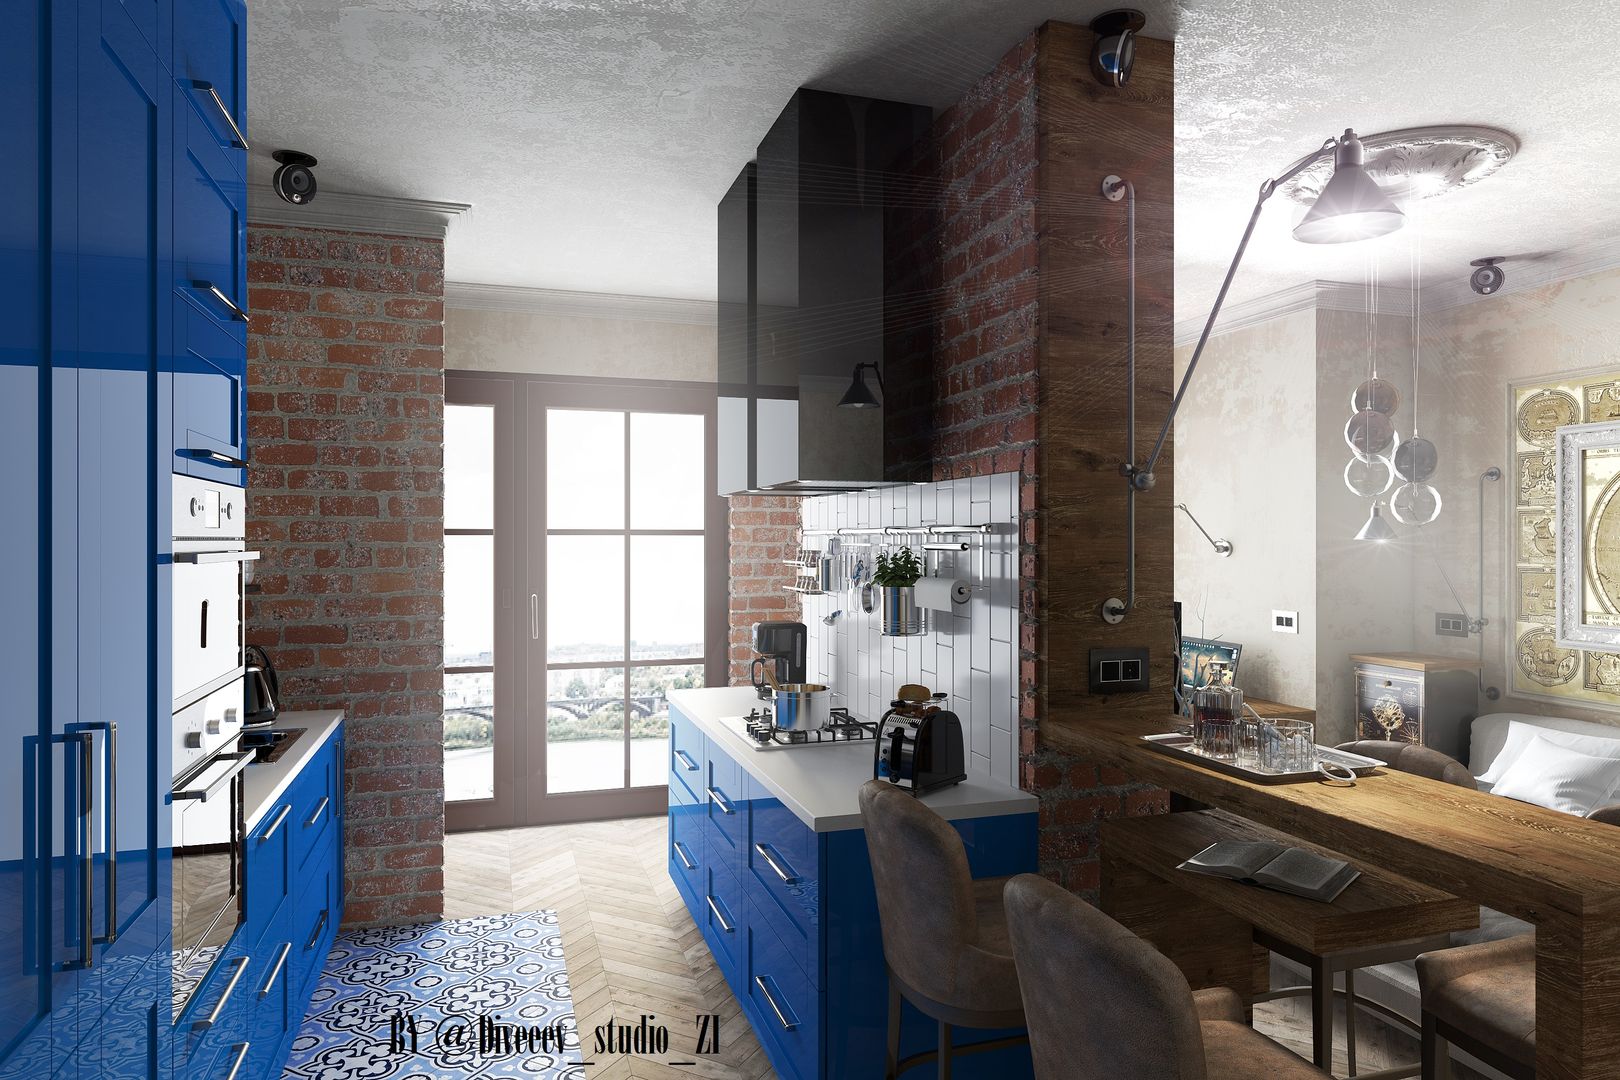 Квартира студия, Diveev_studio#ZI Diveev_studio#ZI ห้องครัว